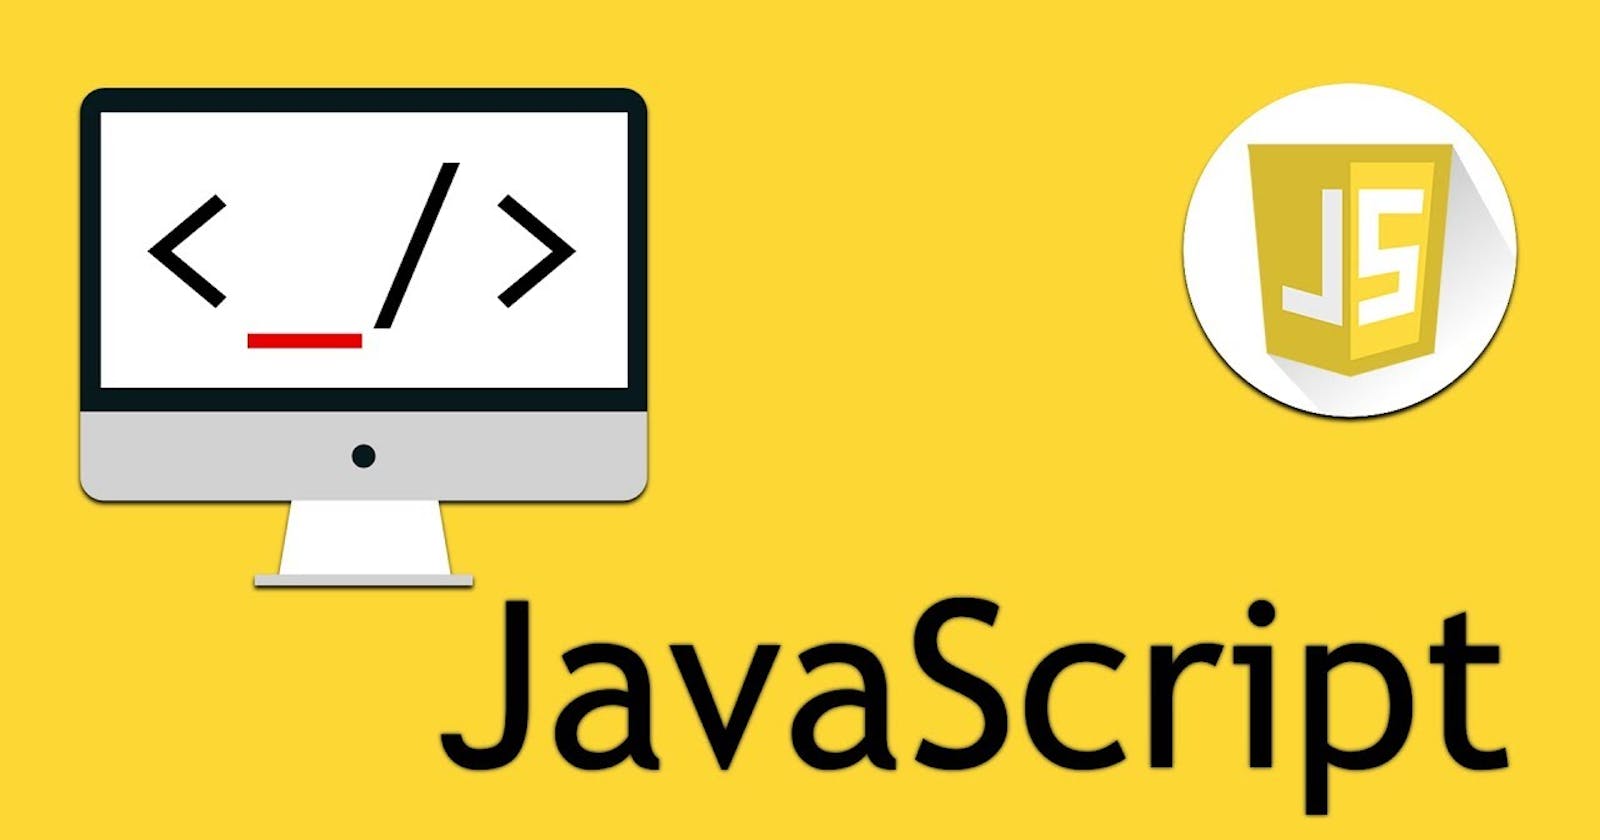 Array in Java Script.